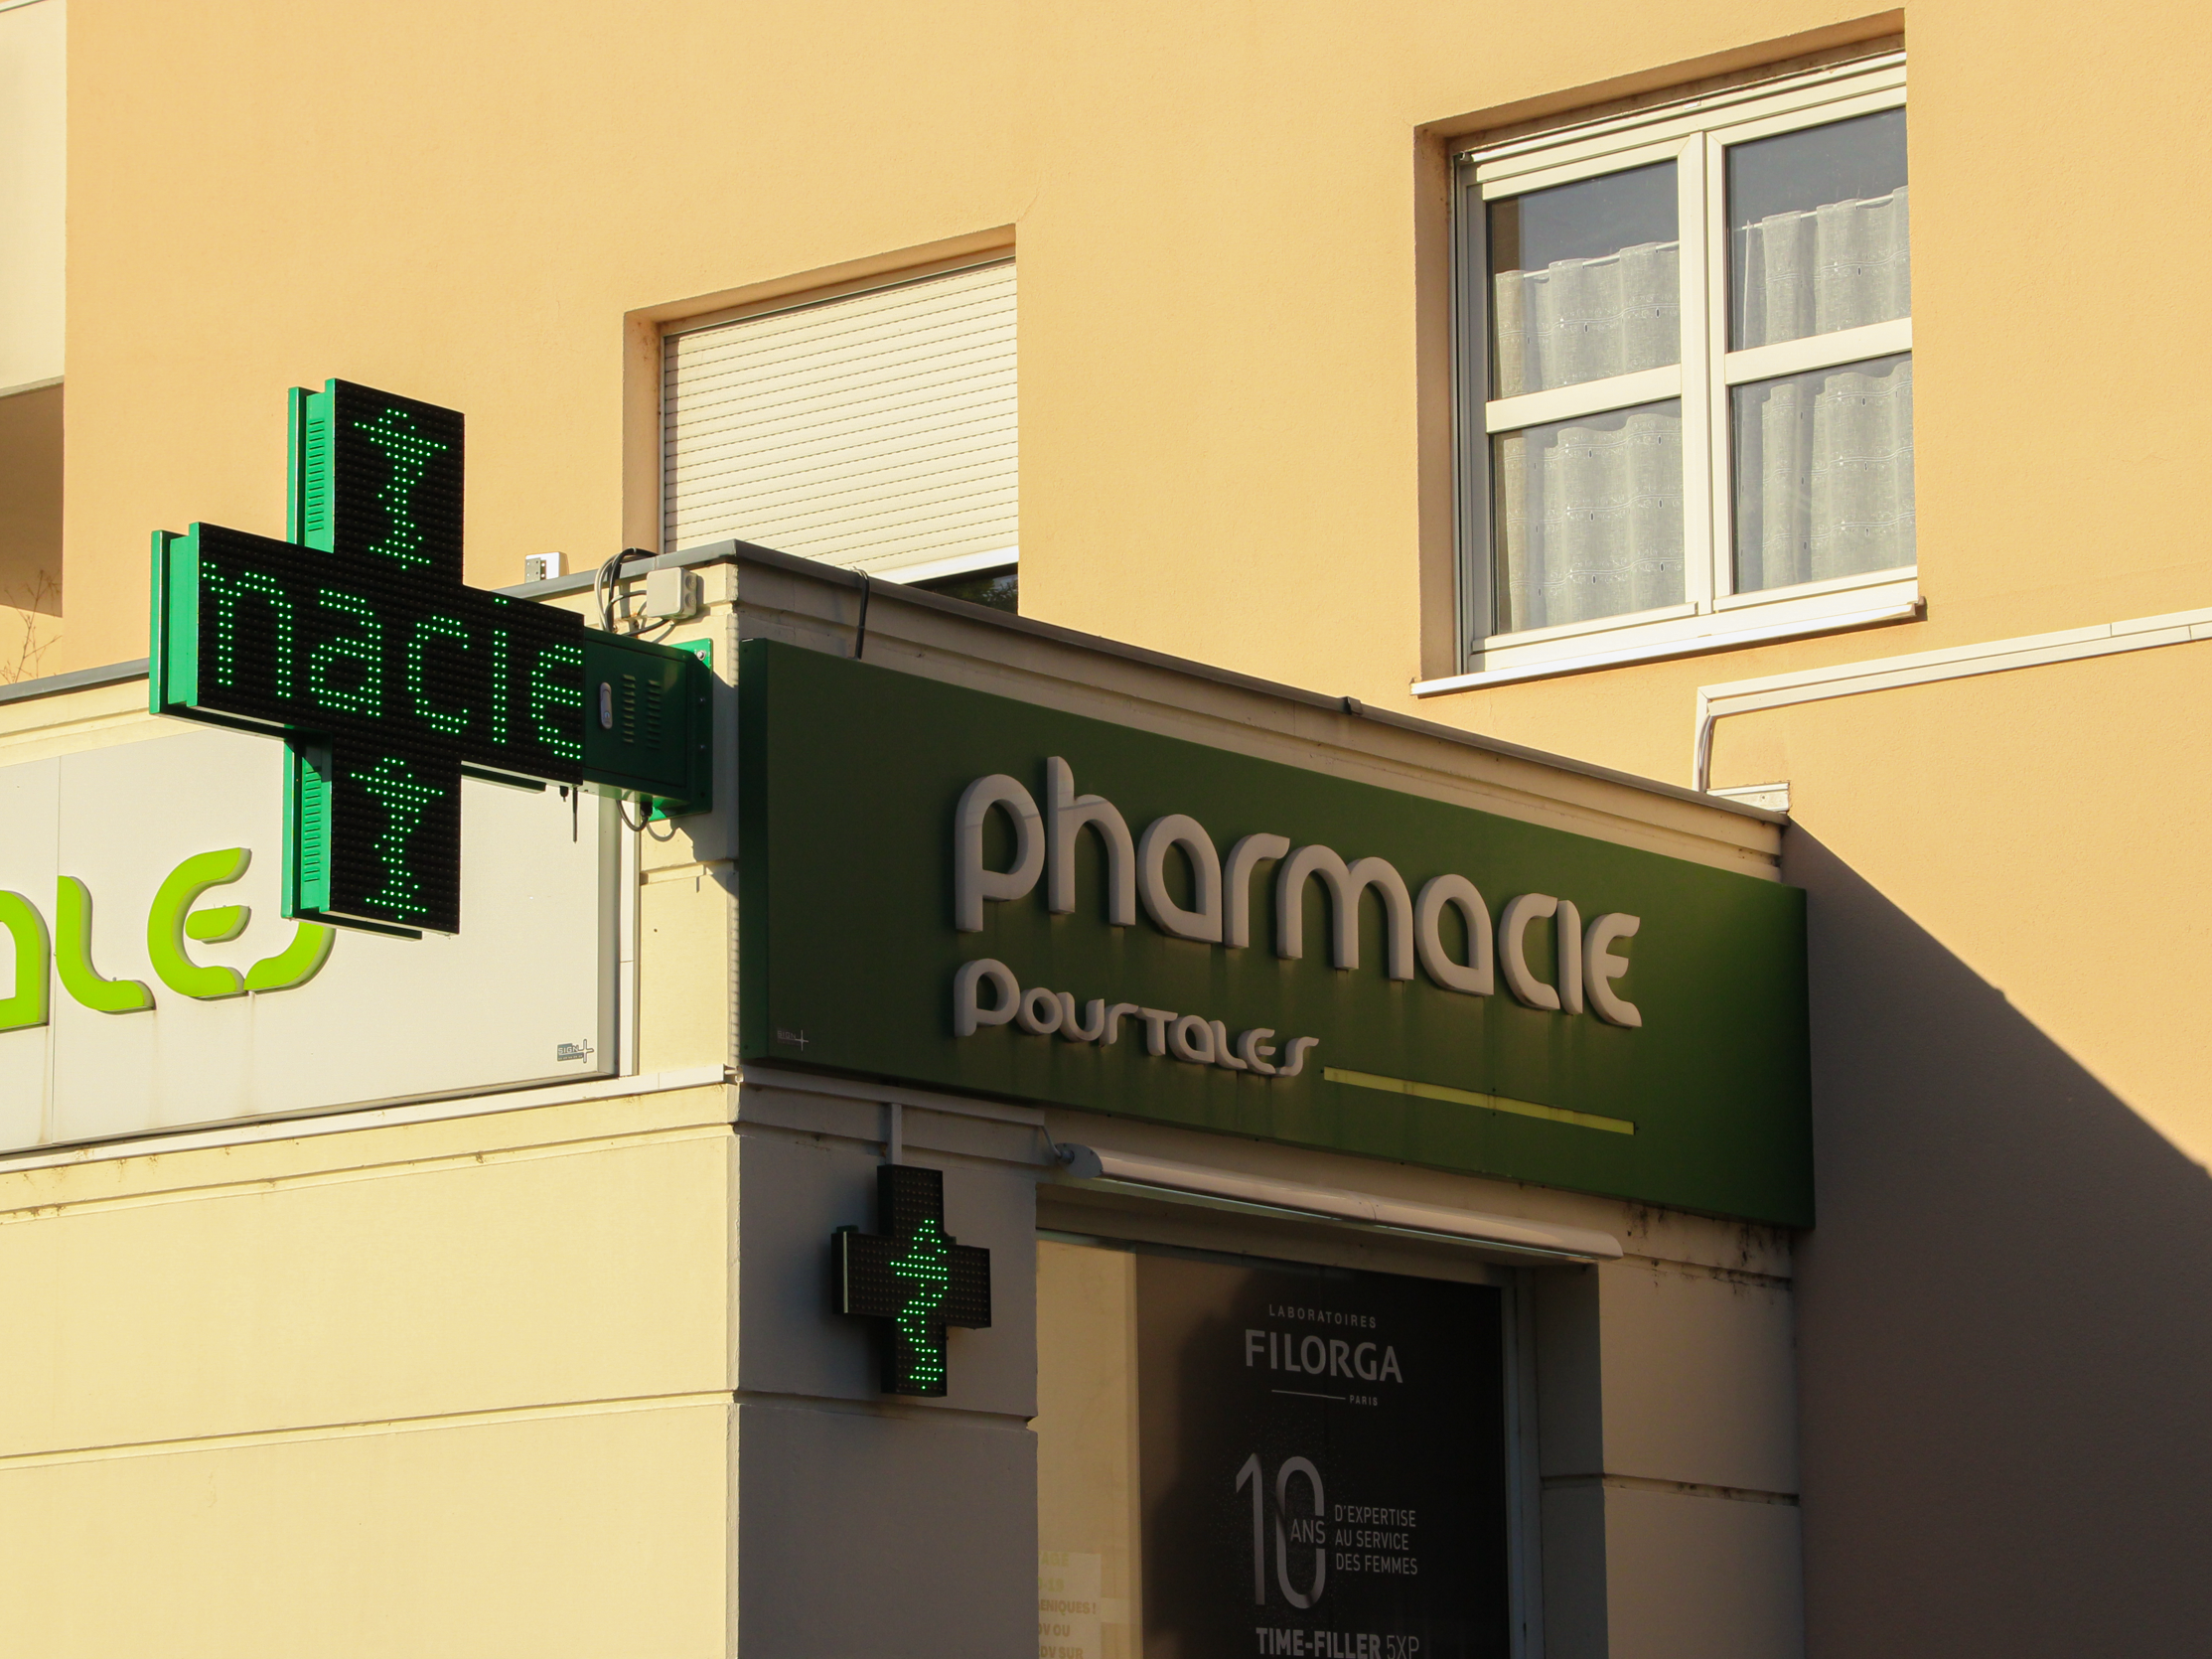 Pharmacie-Pourtalès-lynxmedia.png